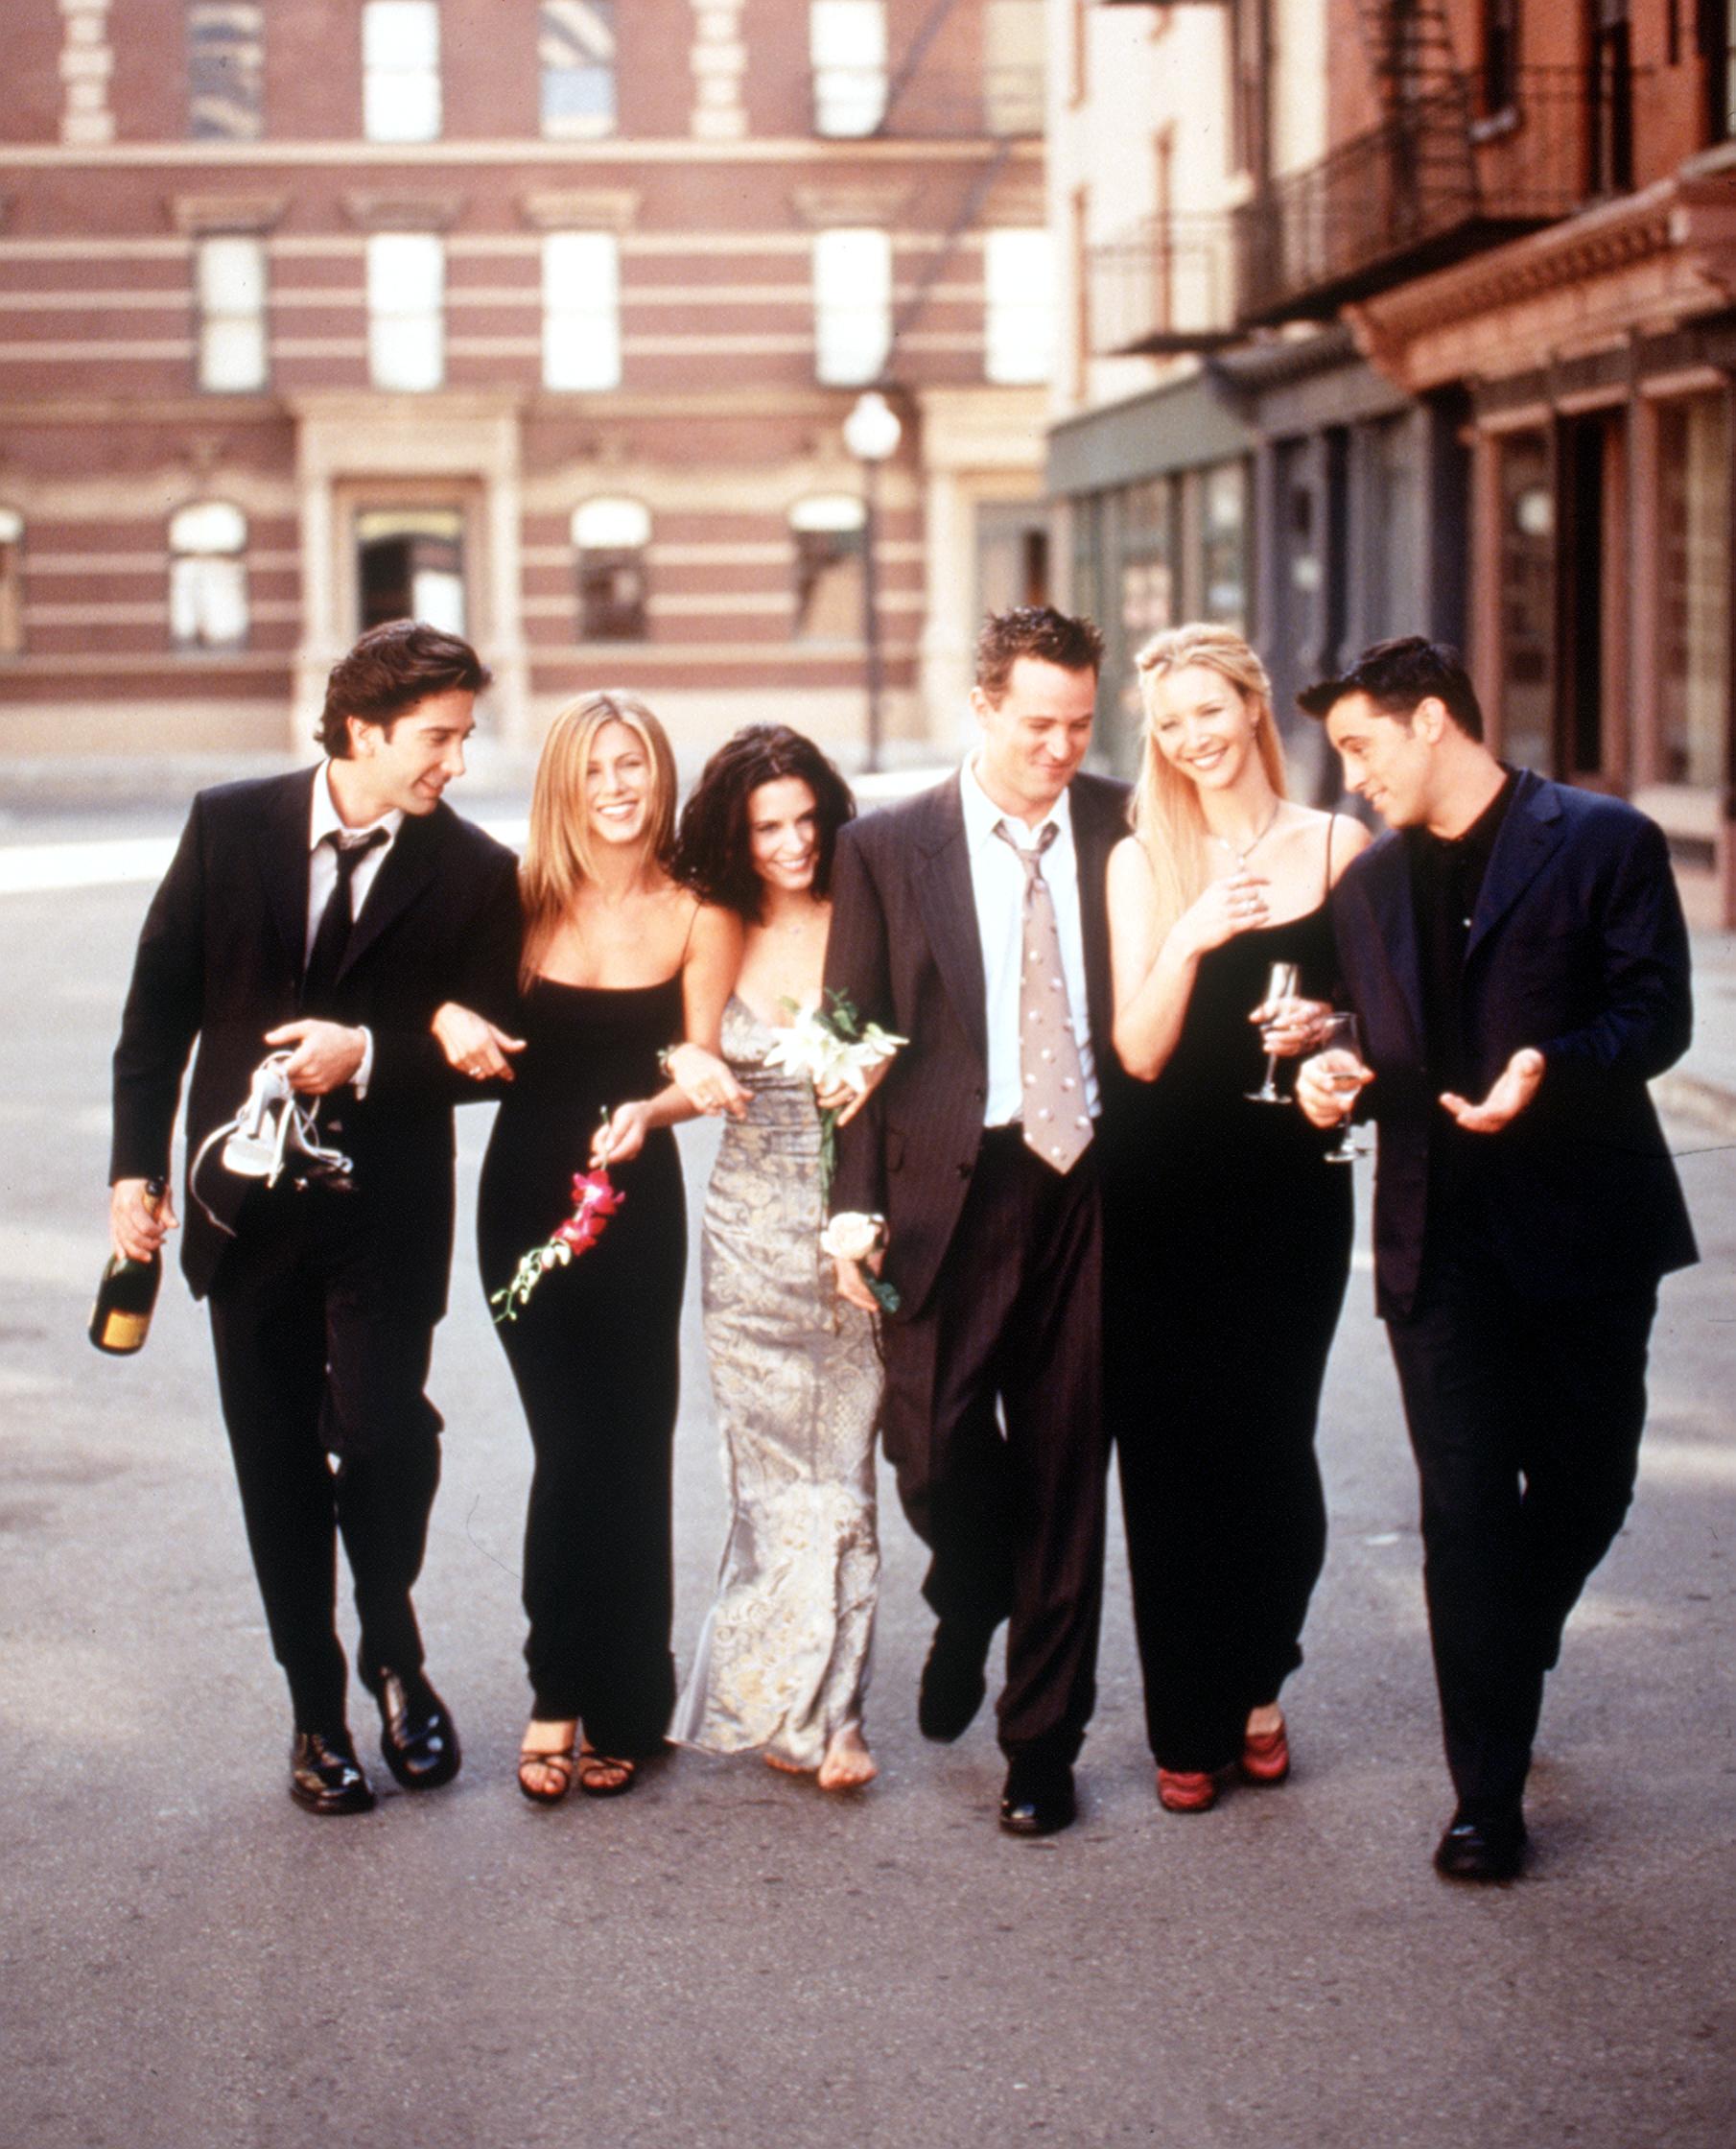 The cast of Friends. From left: David Schwimmer, Jennifer Aniston, Courtney Cox, Matthew Perry, Lisa Kudrow and Matt Leblanc.